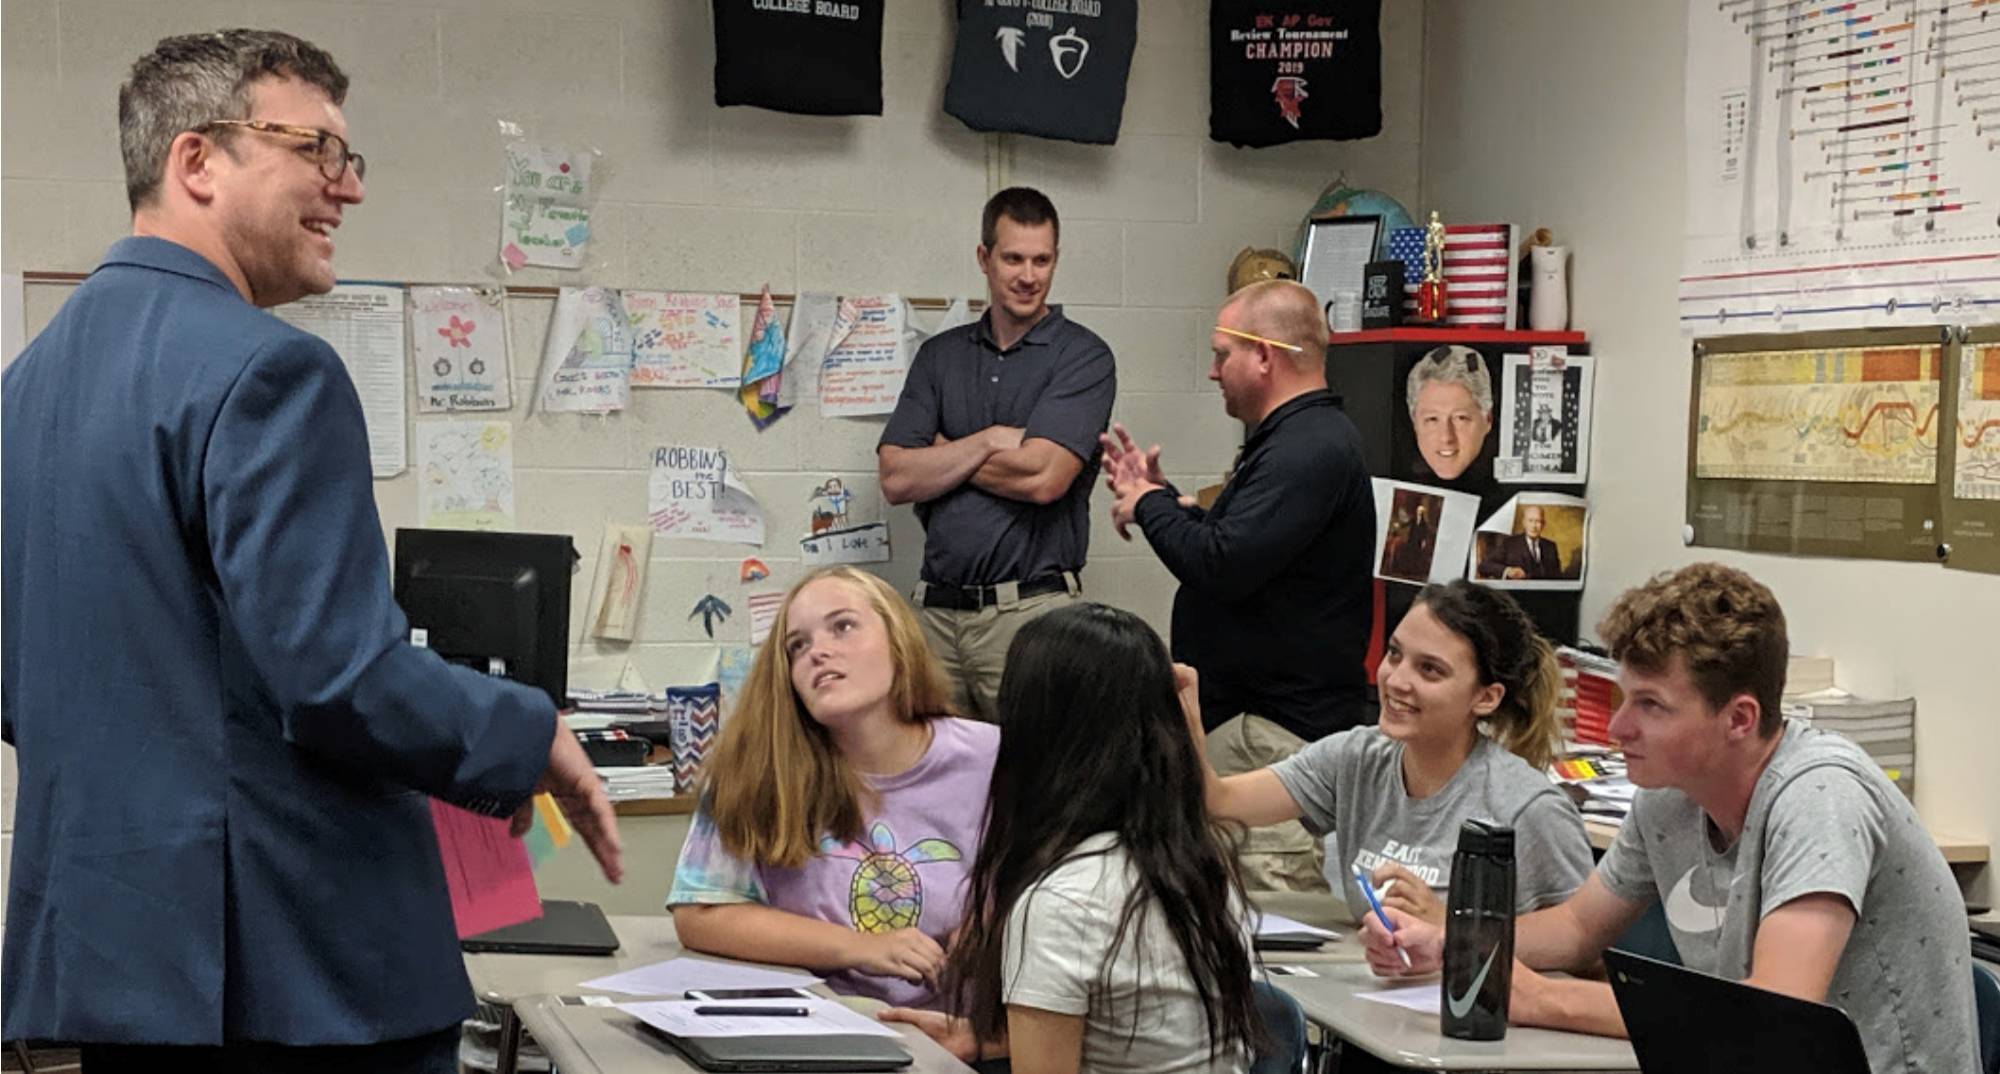 David Crane speaking about democracy in a high school classroom